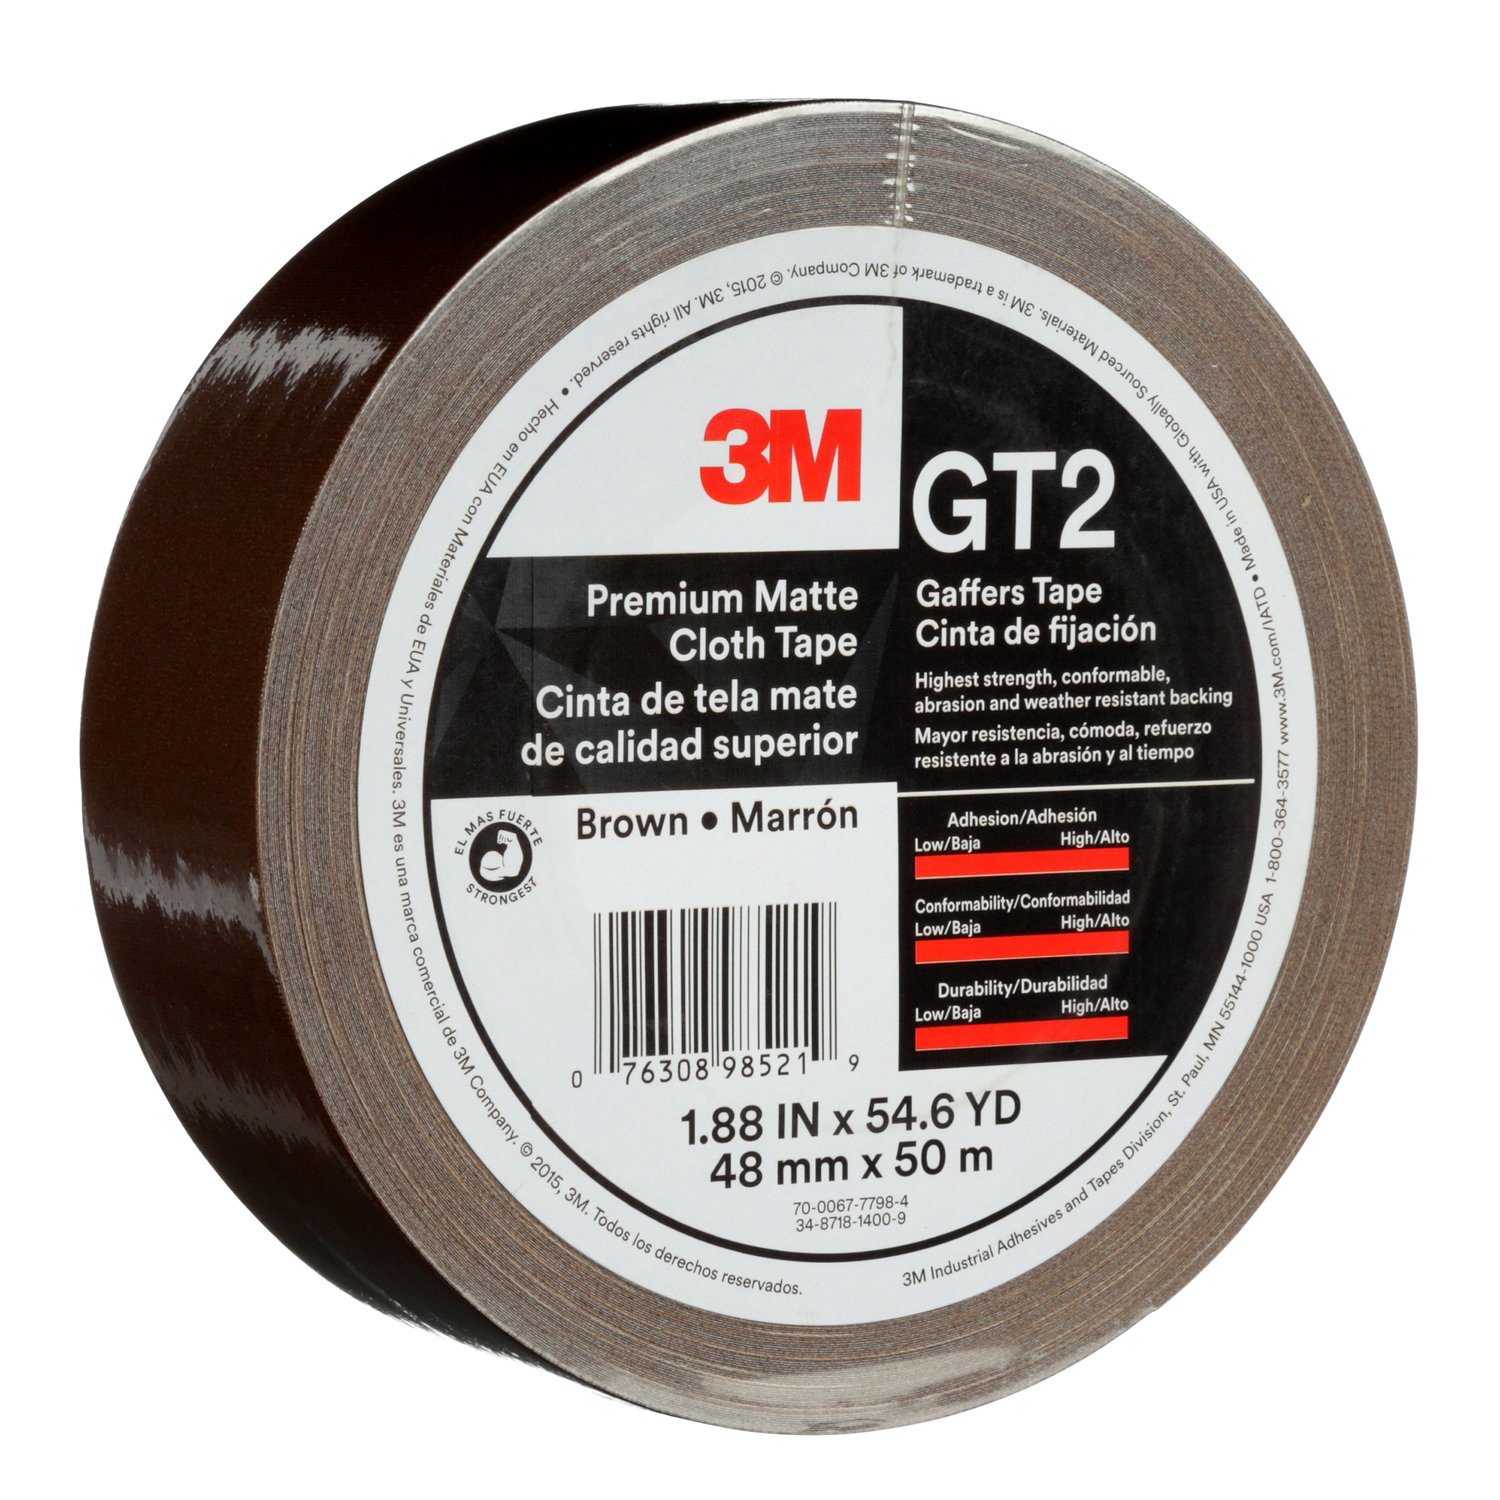 7010375517 - 3M Premium Matte Cloth (Gaffers) Tape GT2, Brown, 48 mm x 50 m, 11 mil,
24/Case